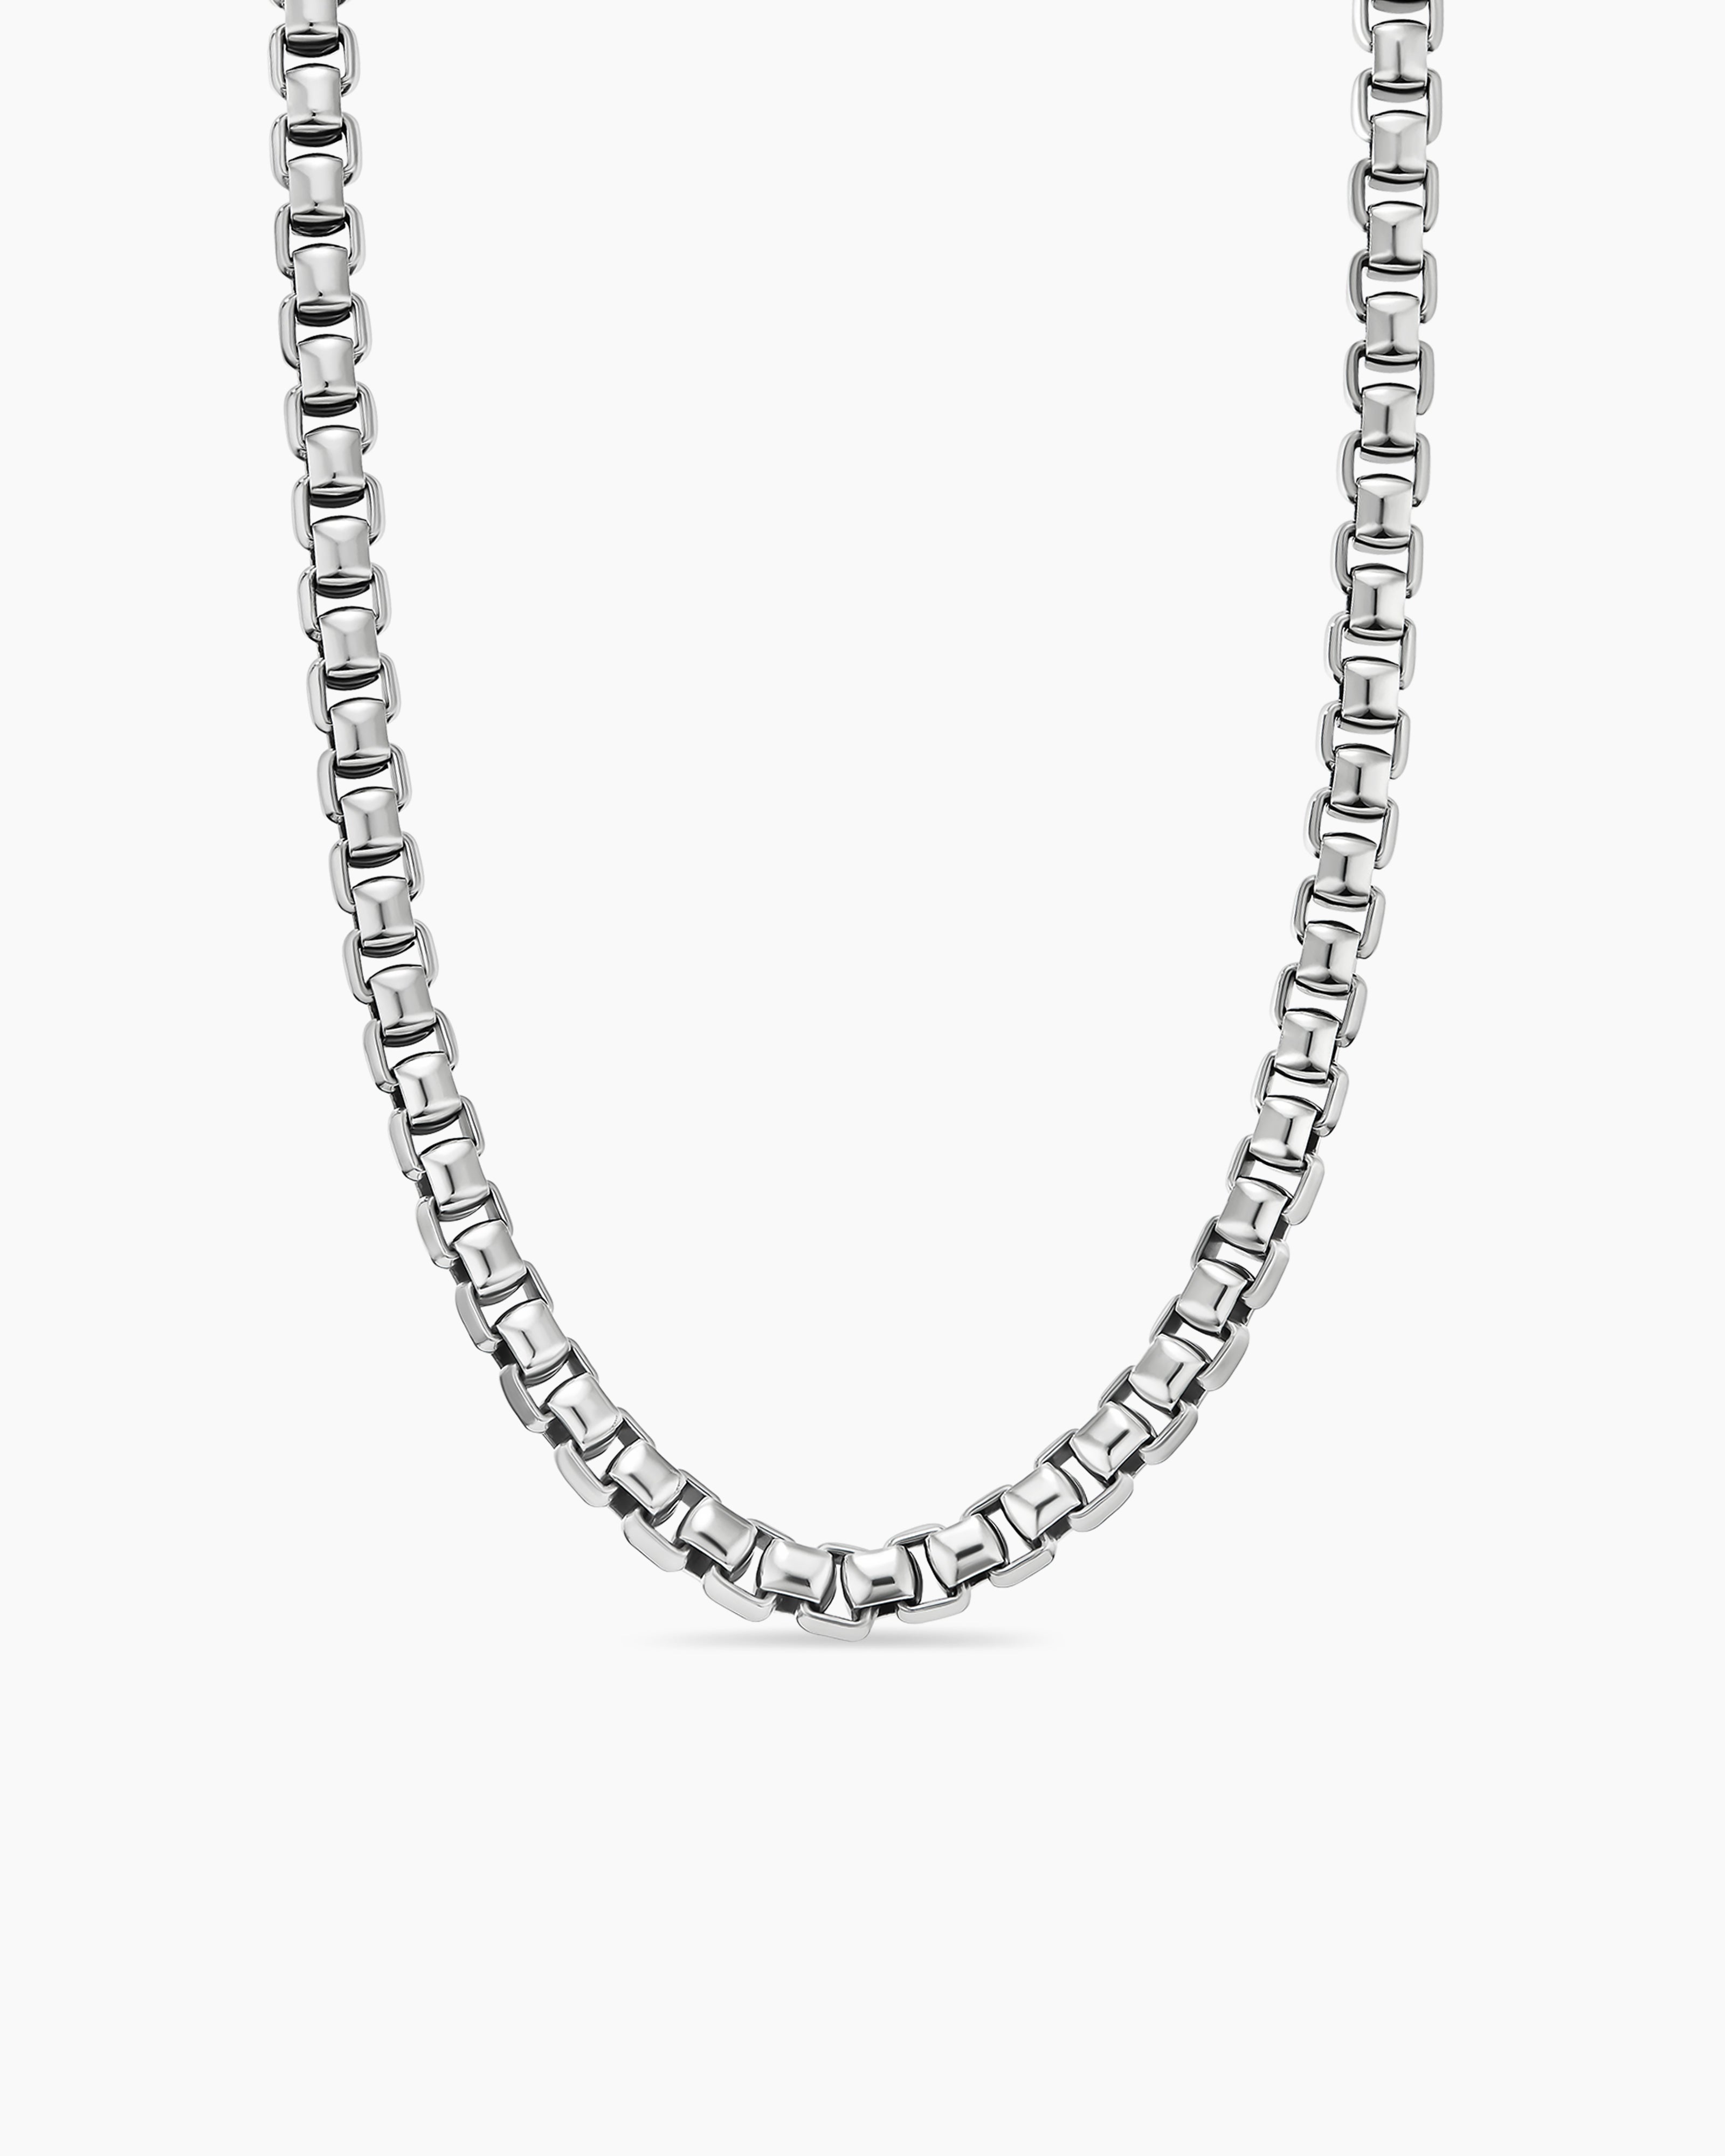 Boa Silver Necklace Chain For Women – The Silver Essence